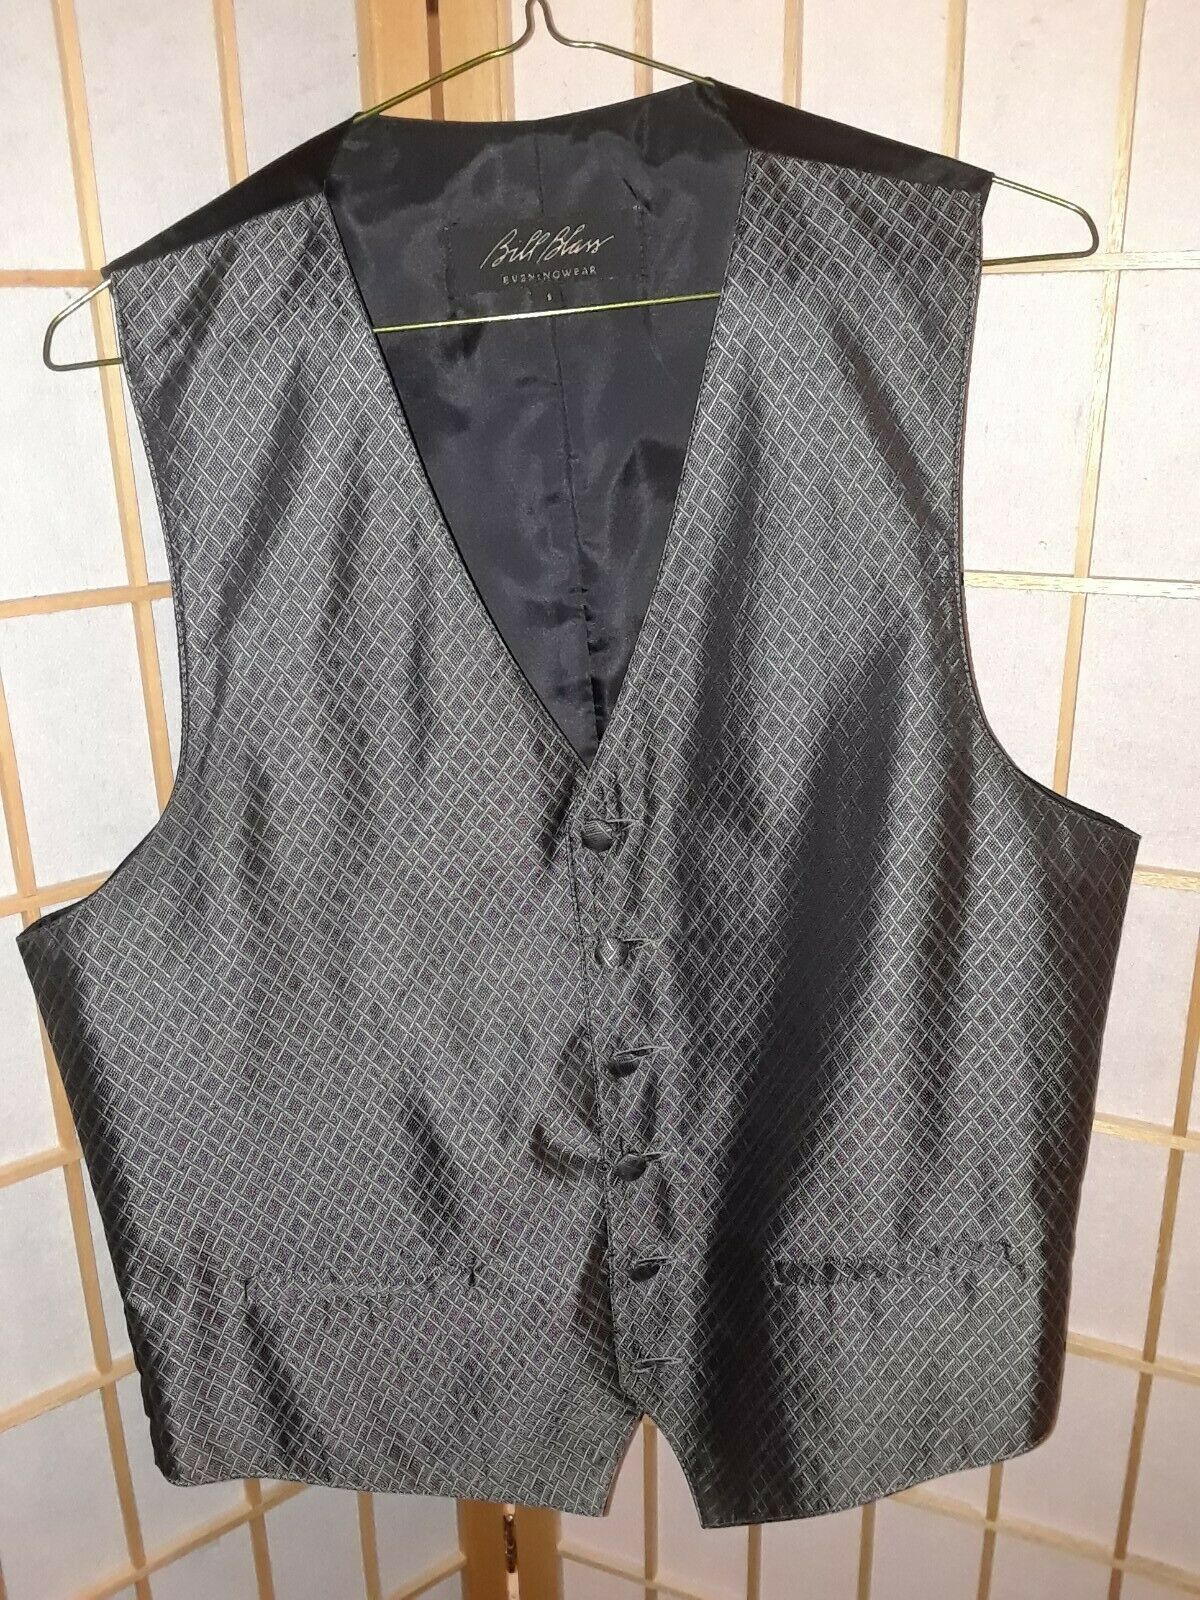 Bill Blass - Eveningwear Formal Men's Vest Size Small